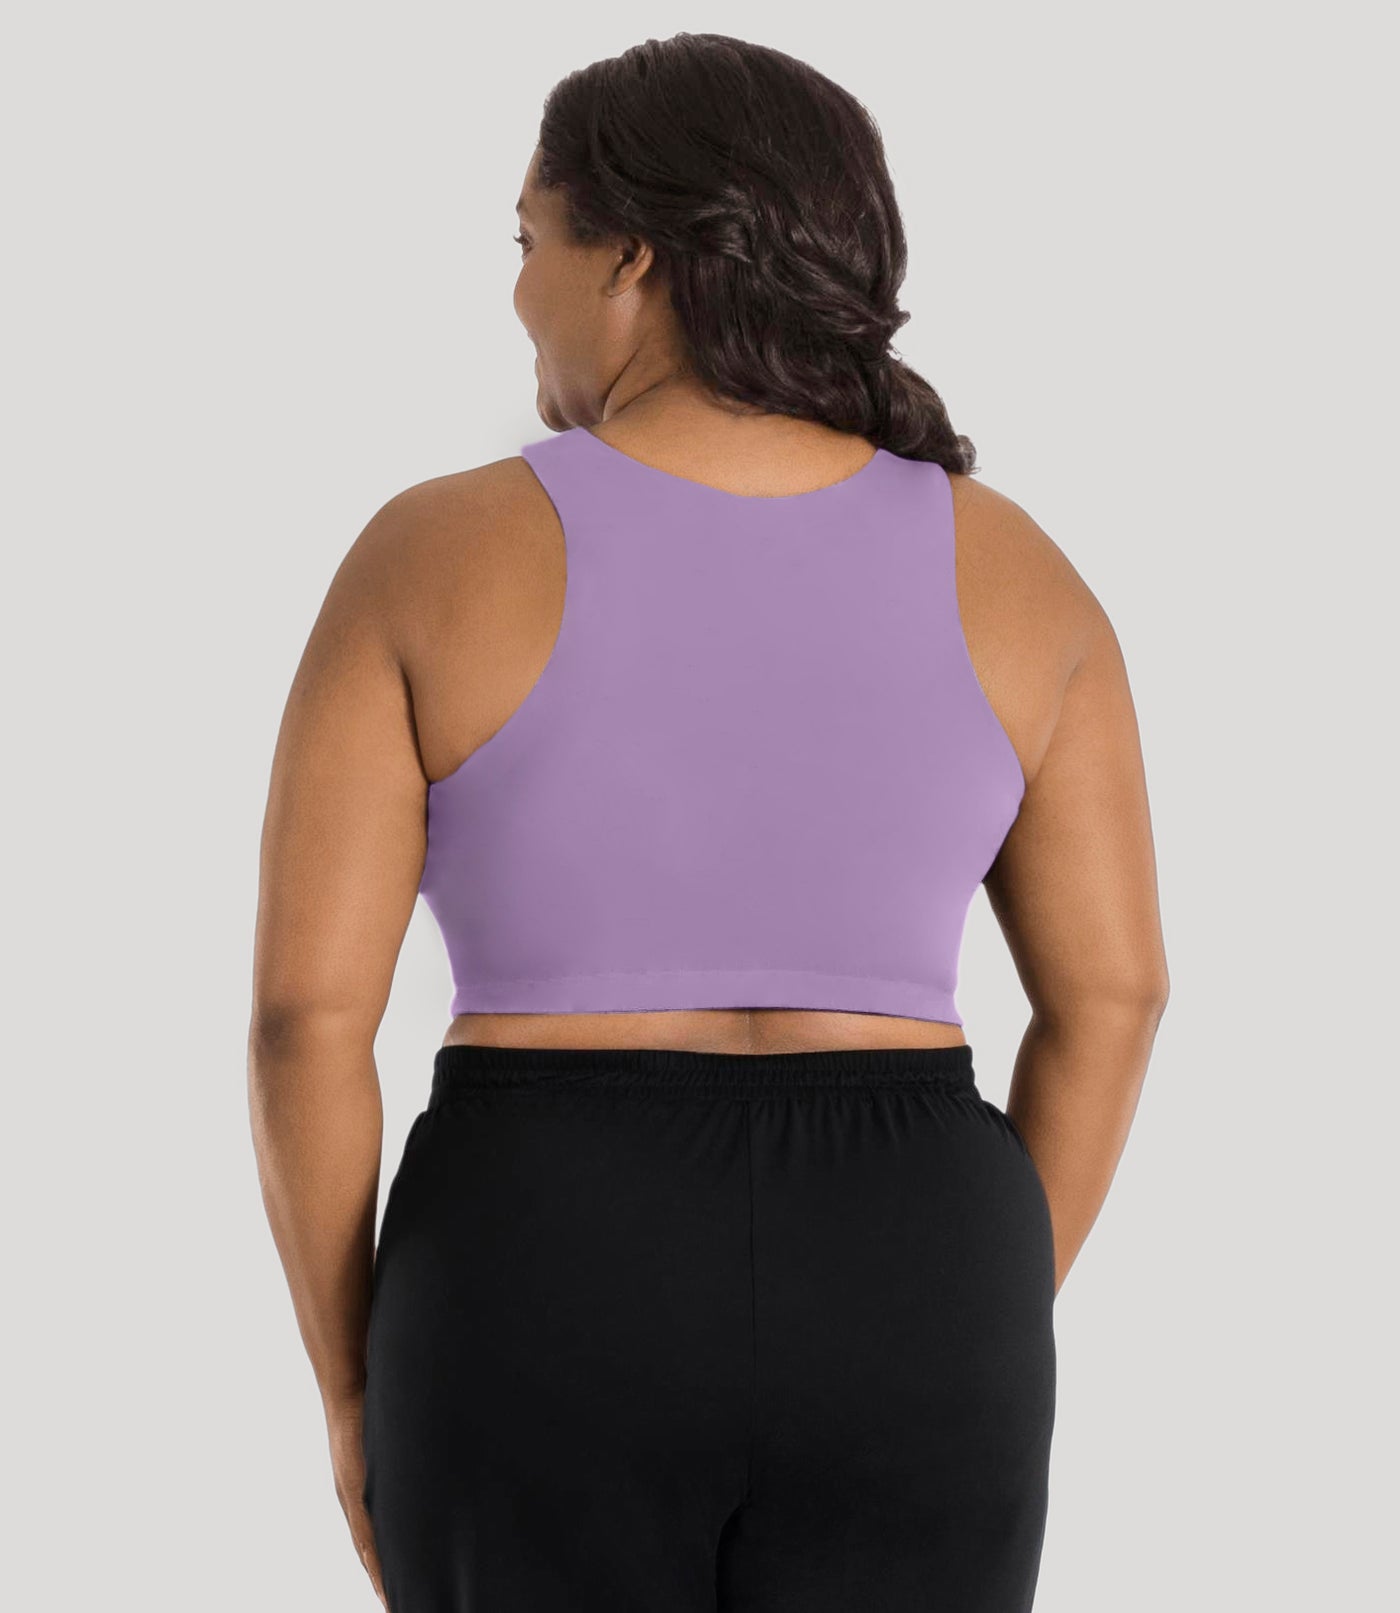 Plus size model, facing back, wearing stretch naturals full fit V-neck plus size bra in color lavender.